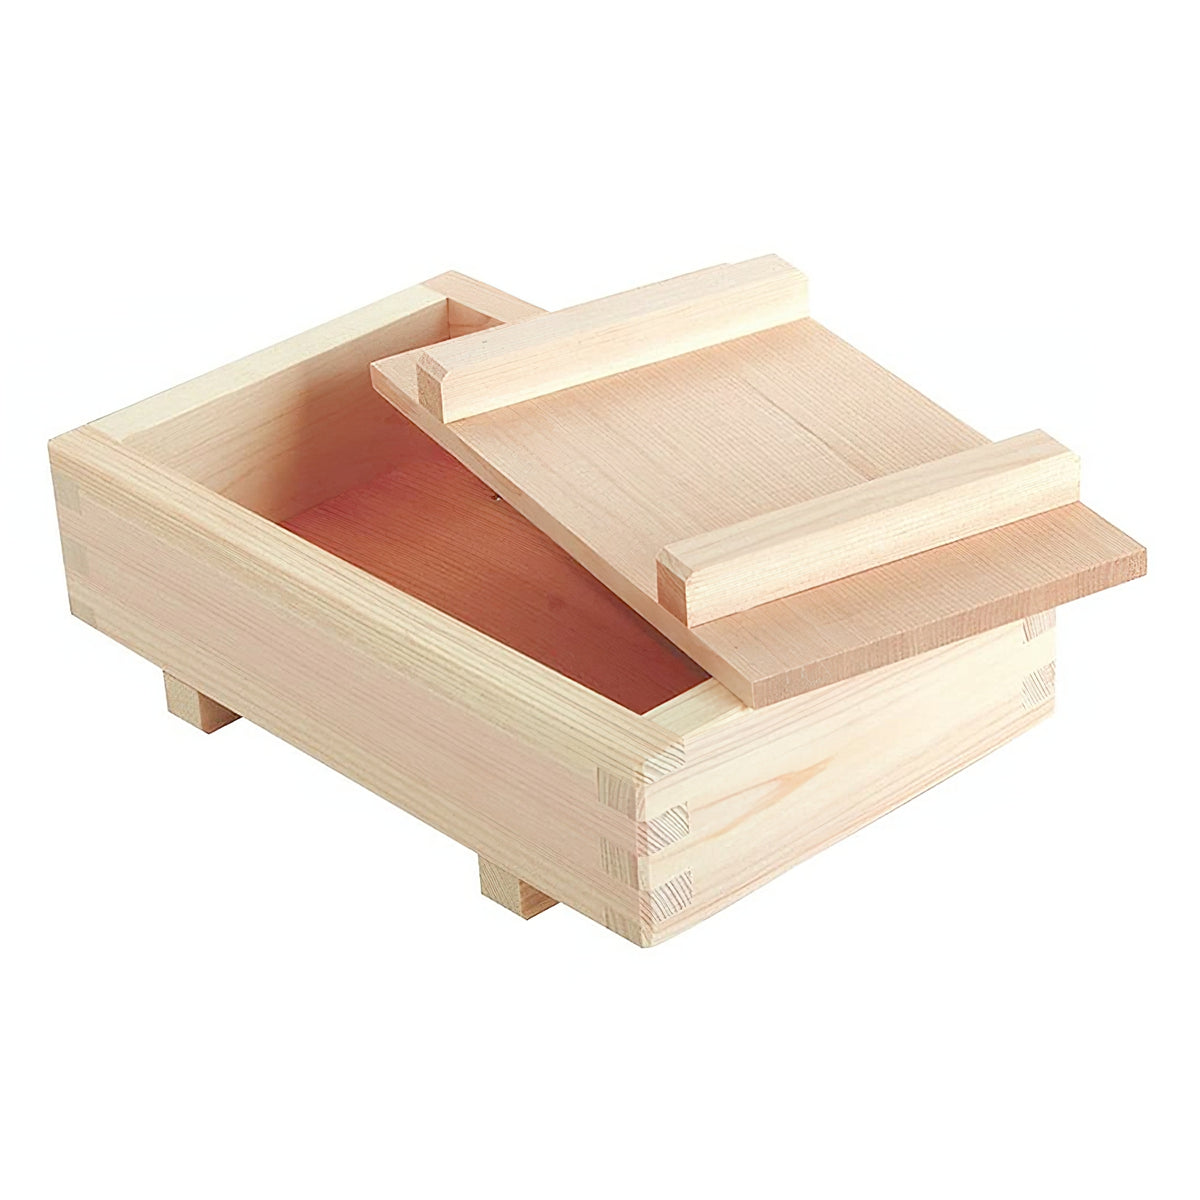 Yamacoh Hinoki Cypress Wooden Sushi Mold